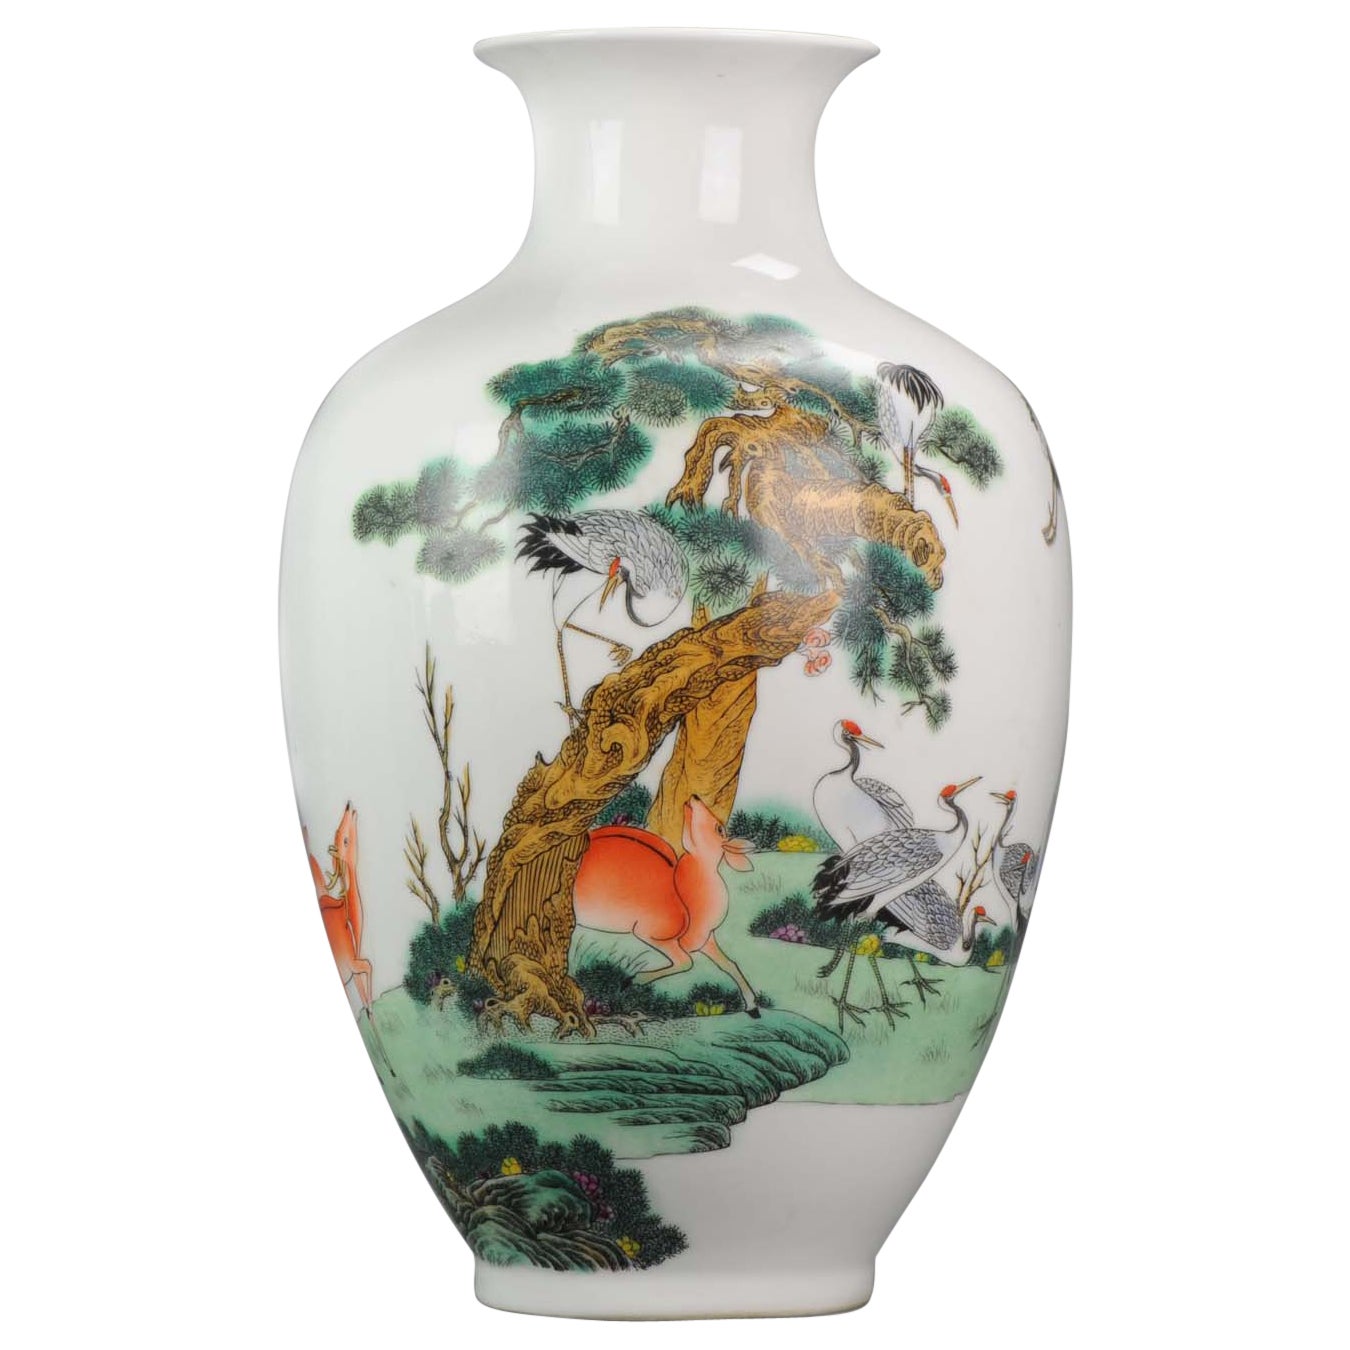 Wonderfull Chinese Porcelain 2nd Half Vase, 20th Century